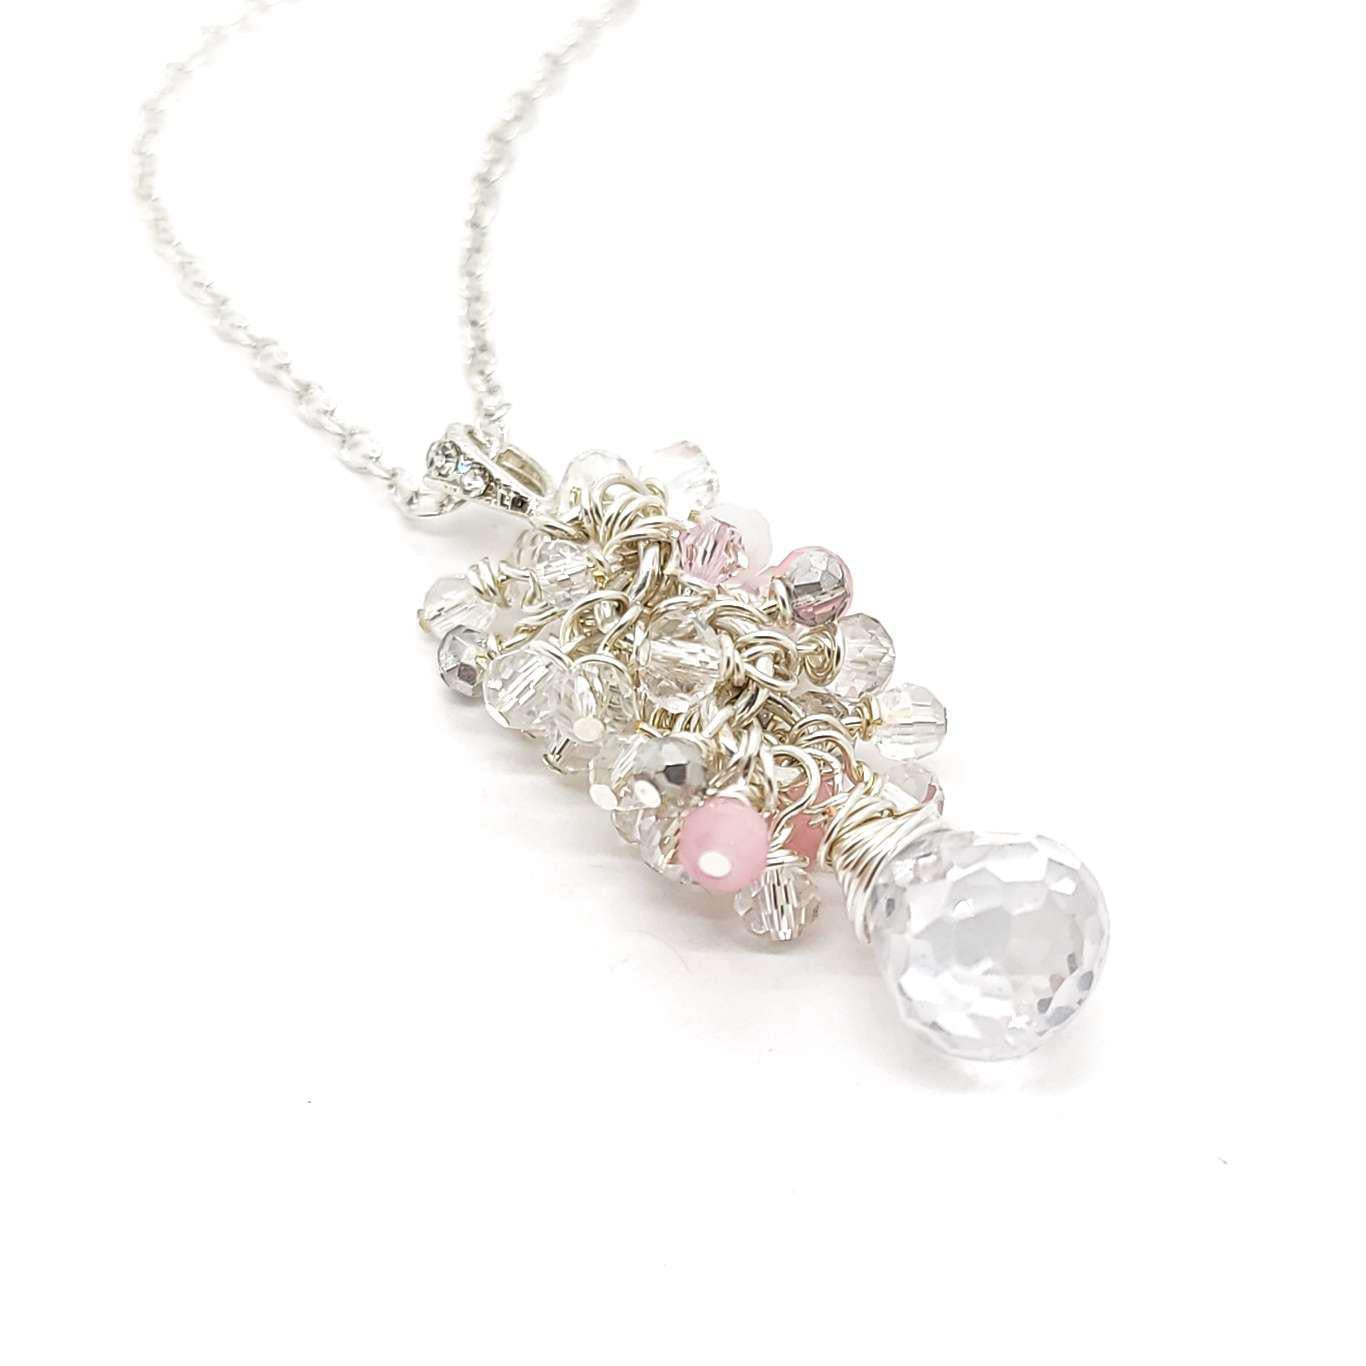 Necklace - Blush Rose and Gray Crystal Teardrop Cluster by Sugar Sidewalk